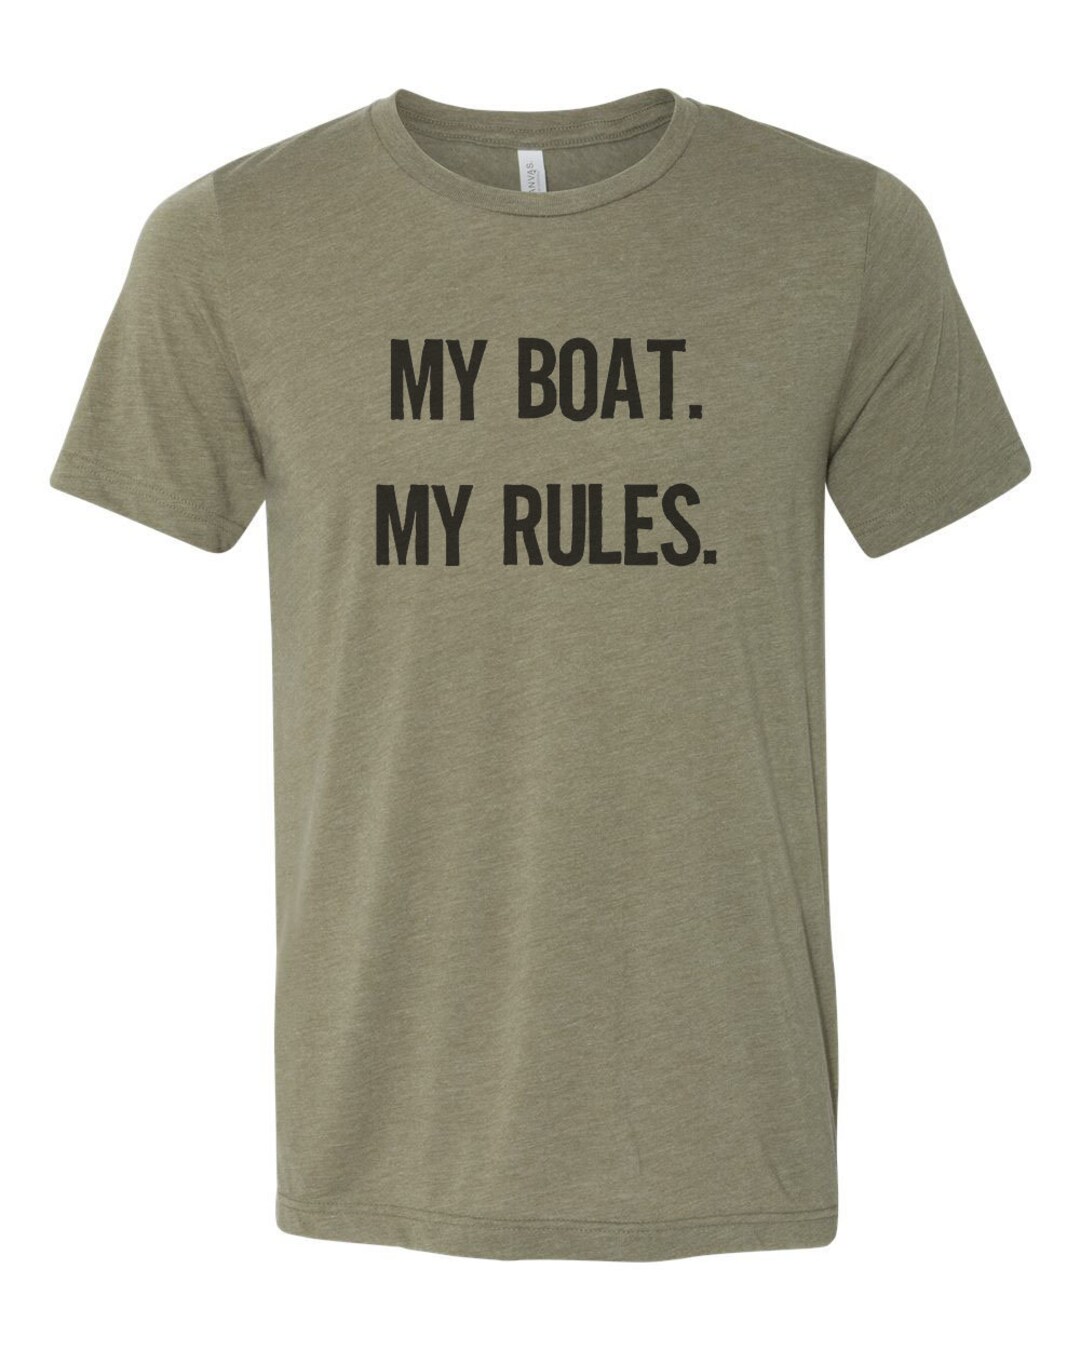 Boat Shirt My Boat My Rules Fishing Apparel Fishing Tshirt - Etsy